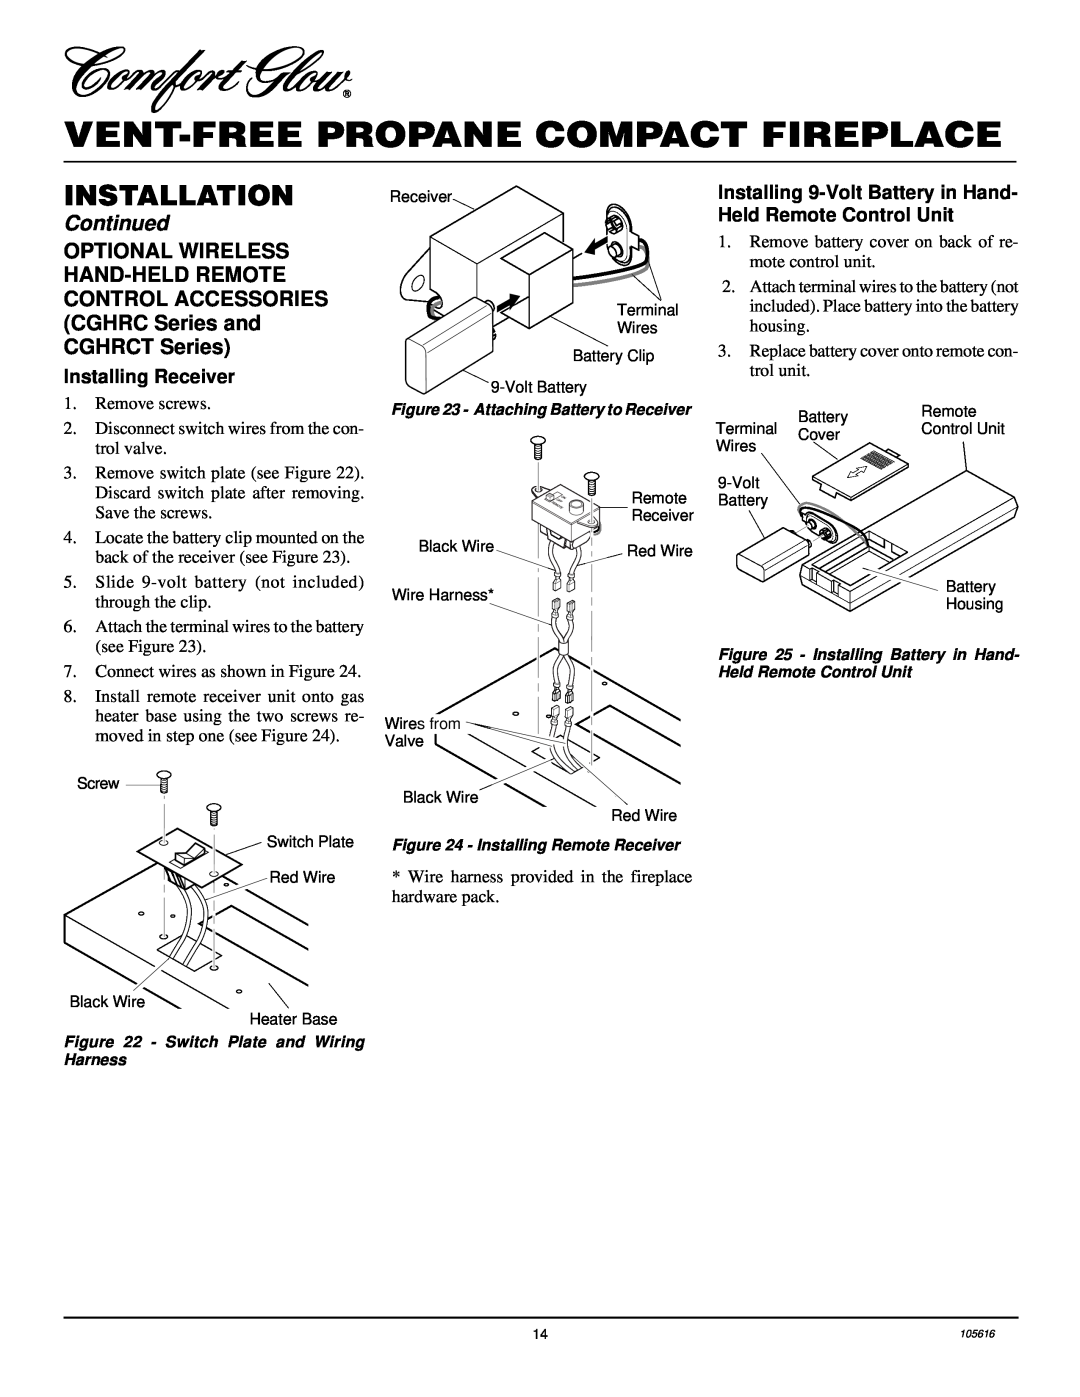 Desa CGCF26PRA installation manual Vent-Freepropane Compact Fireplace, Installation, Continued, Installing Receiver 